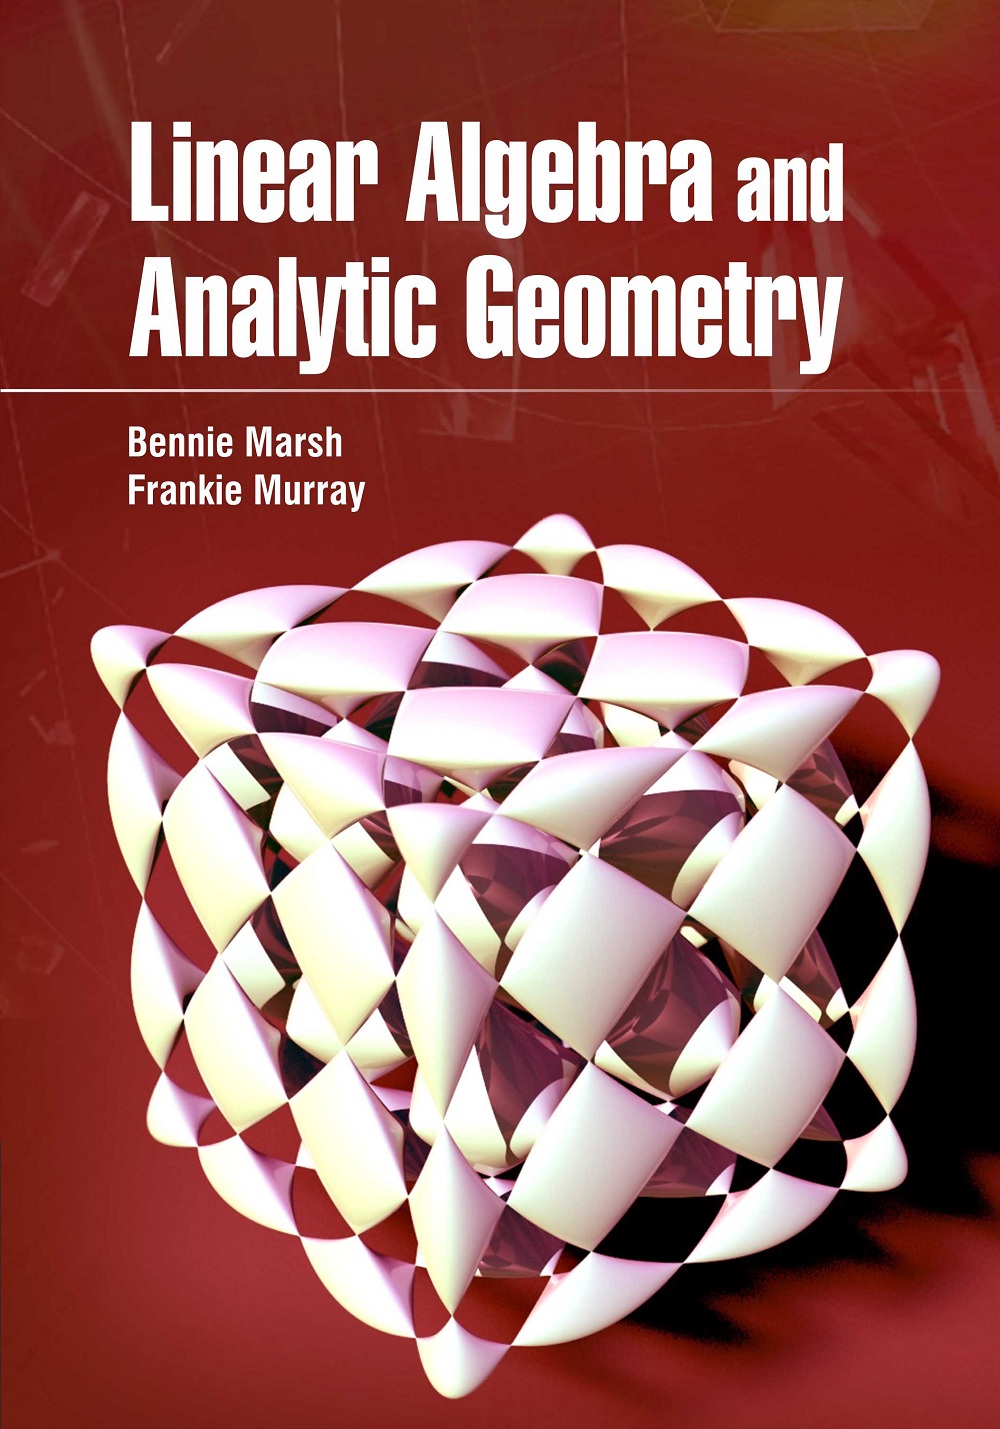 Linear Algebra and Analytic Geometry